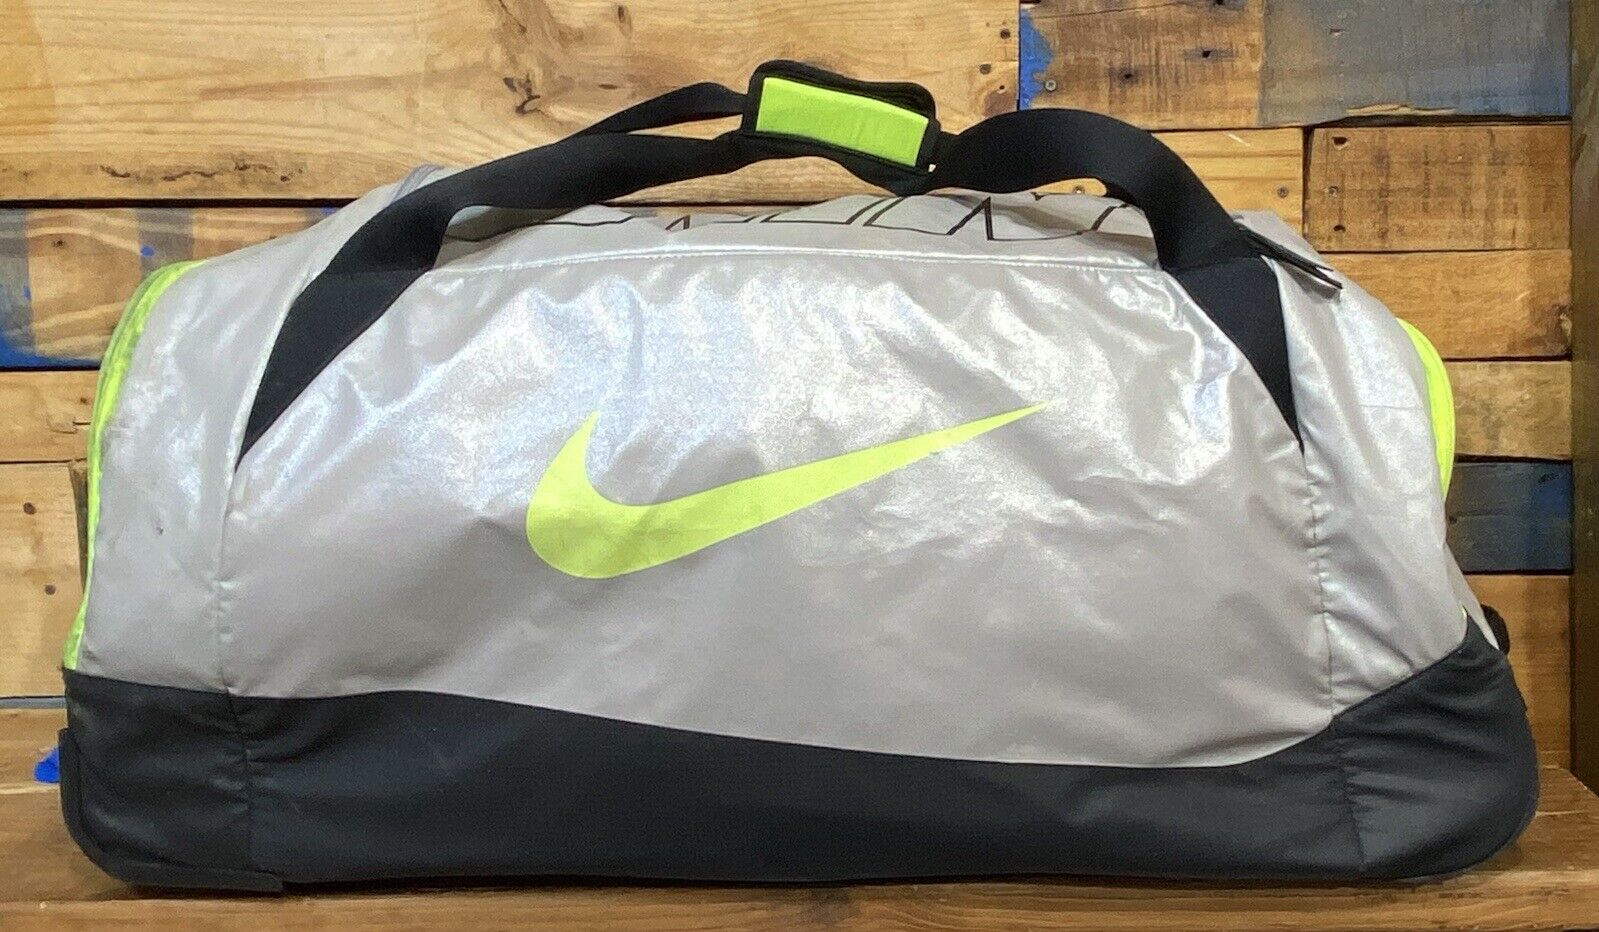 Nike Large Equipment Duffle Bag Wheels Carry Handle 32x12 Silver Neon Black